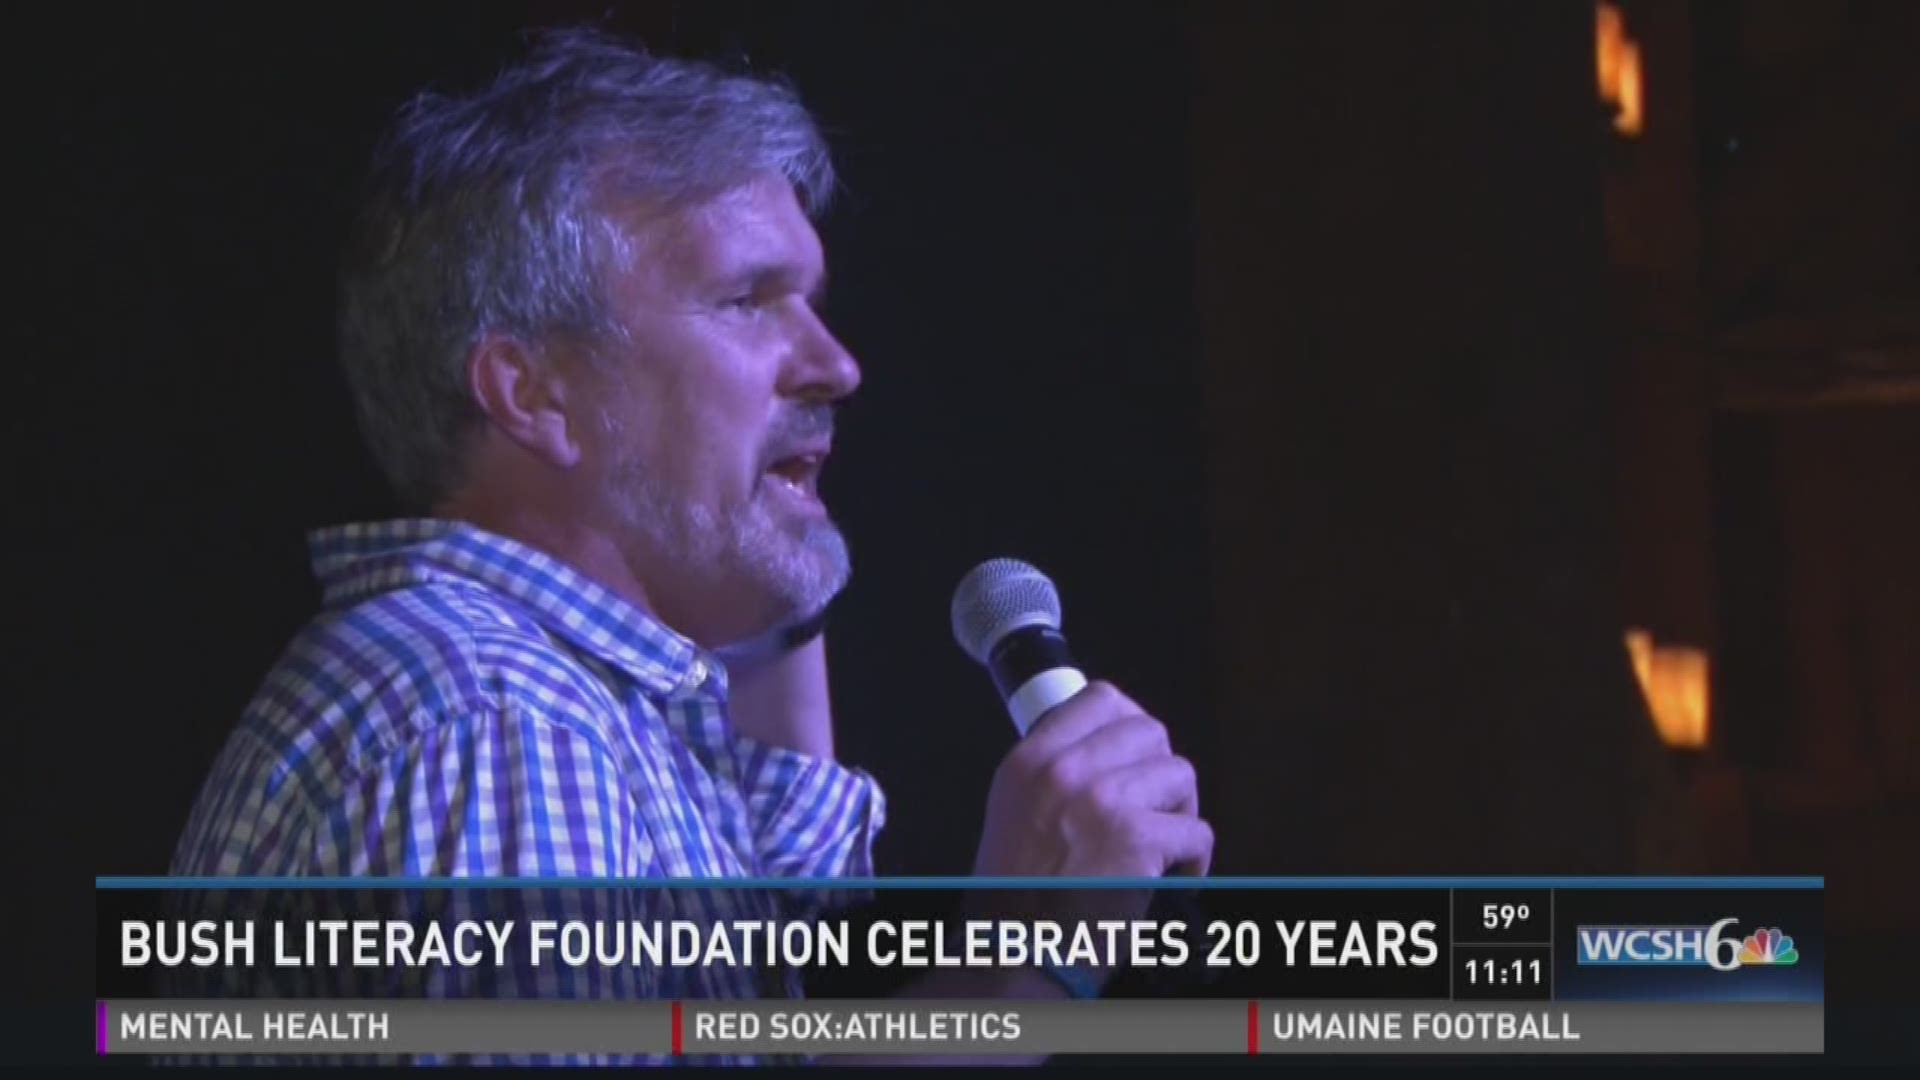 Bush literacy foundation celebrates 20-years of service.